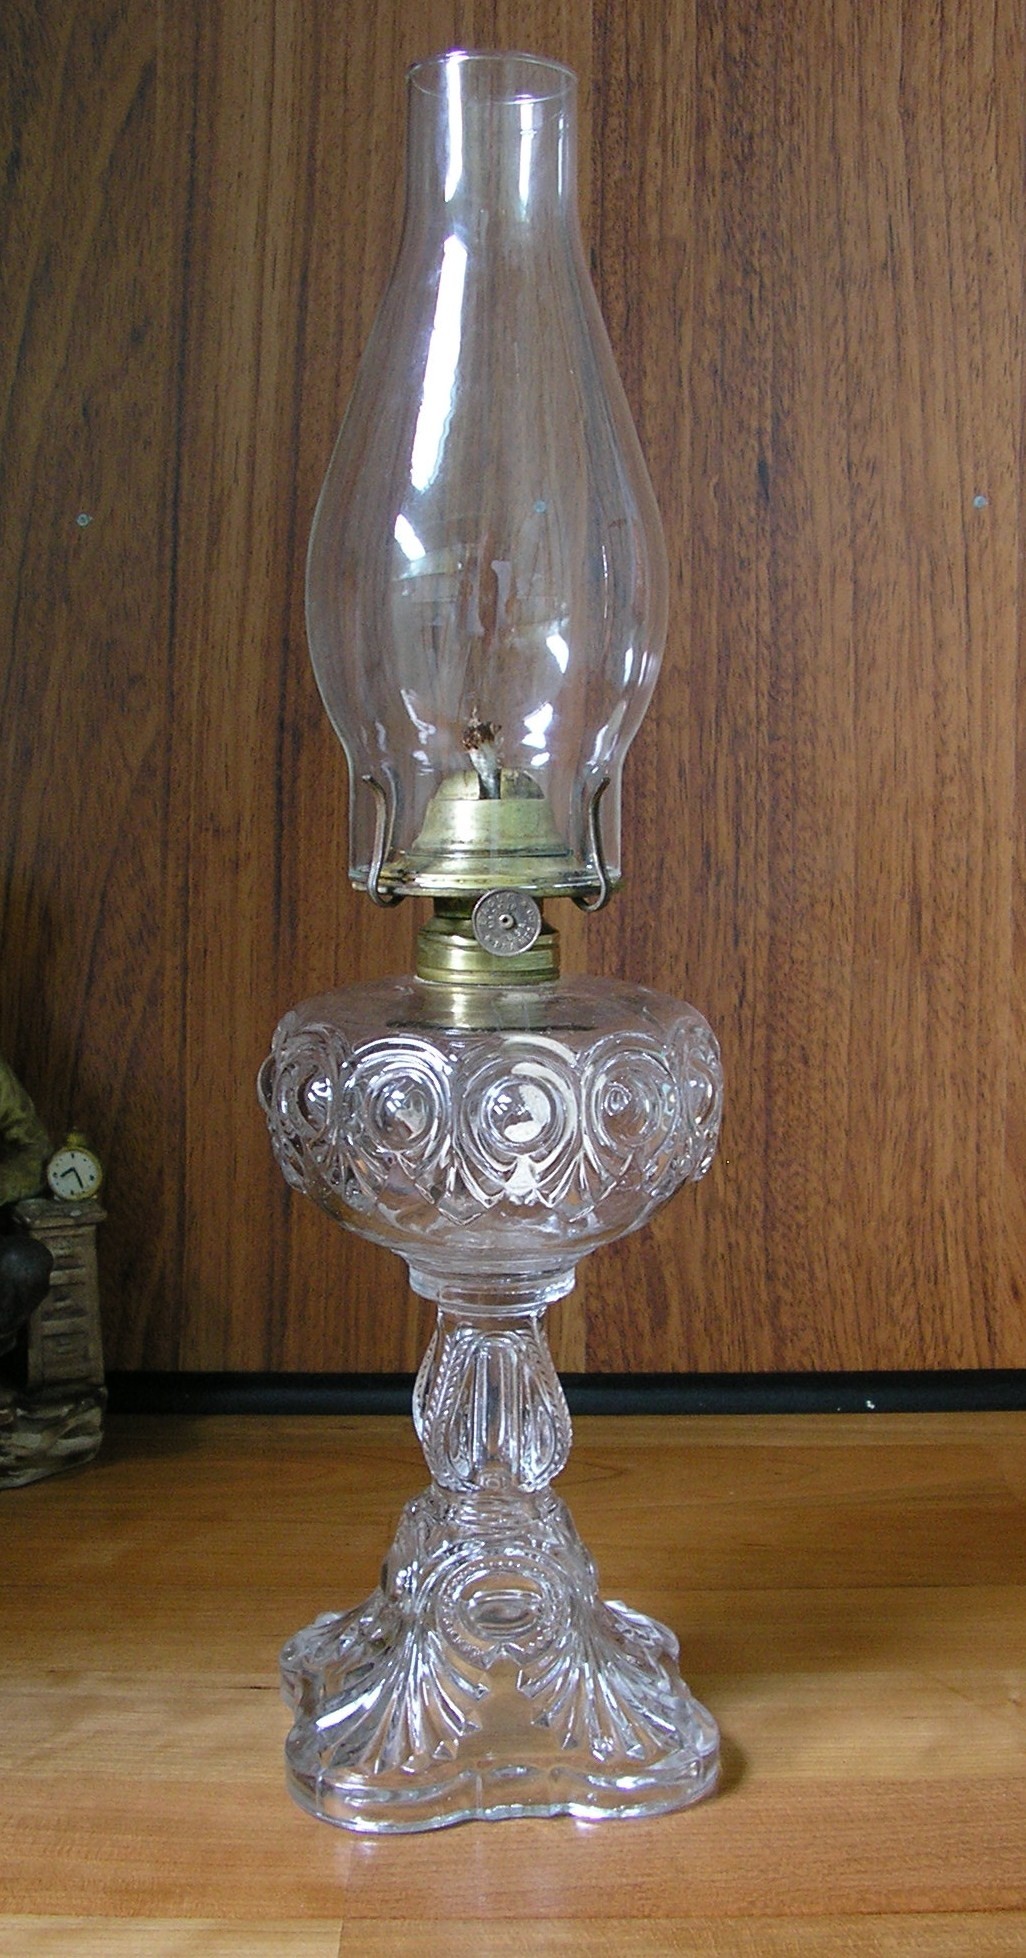 10 reasons to buy antique oil lamps warisan lighting 2